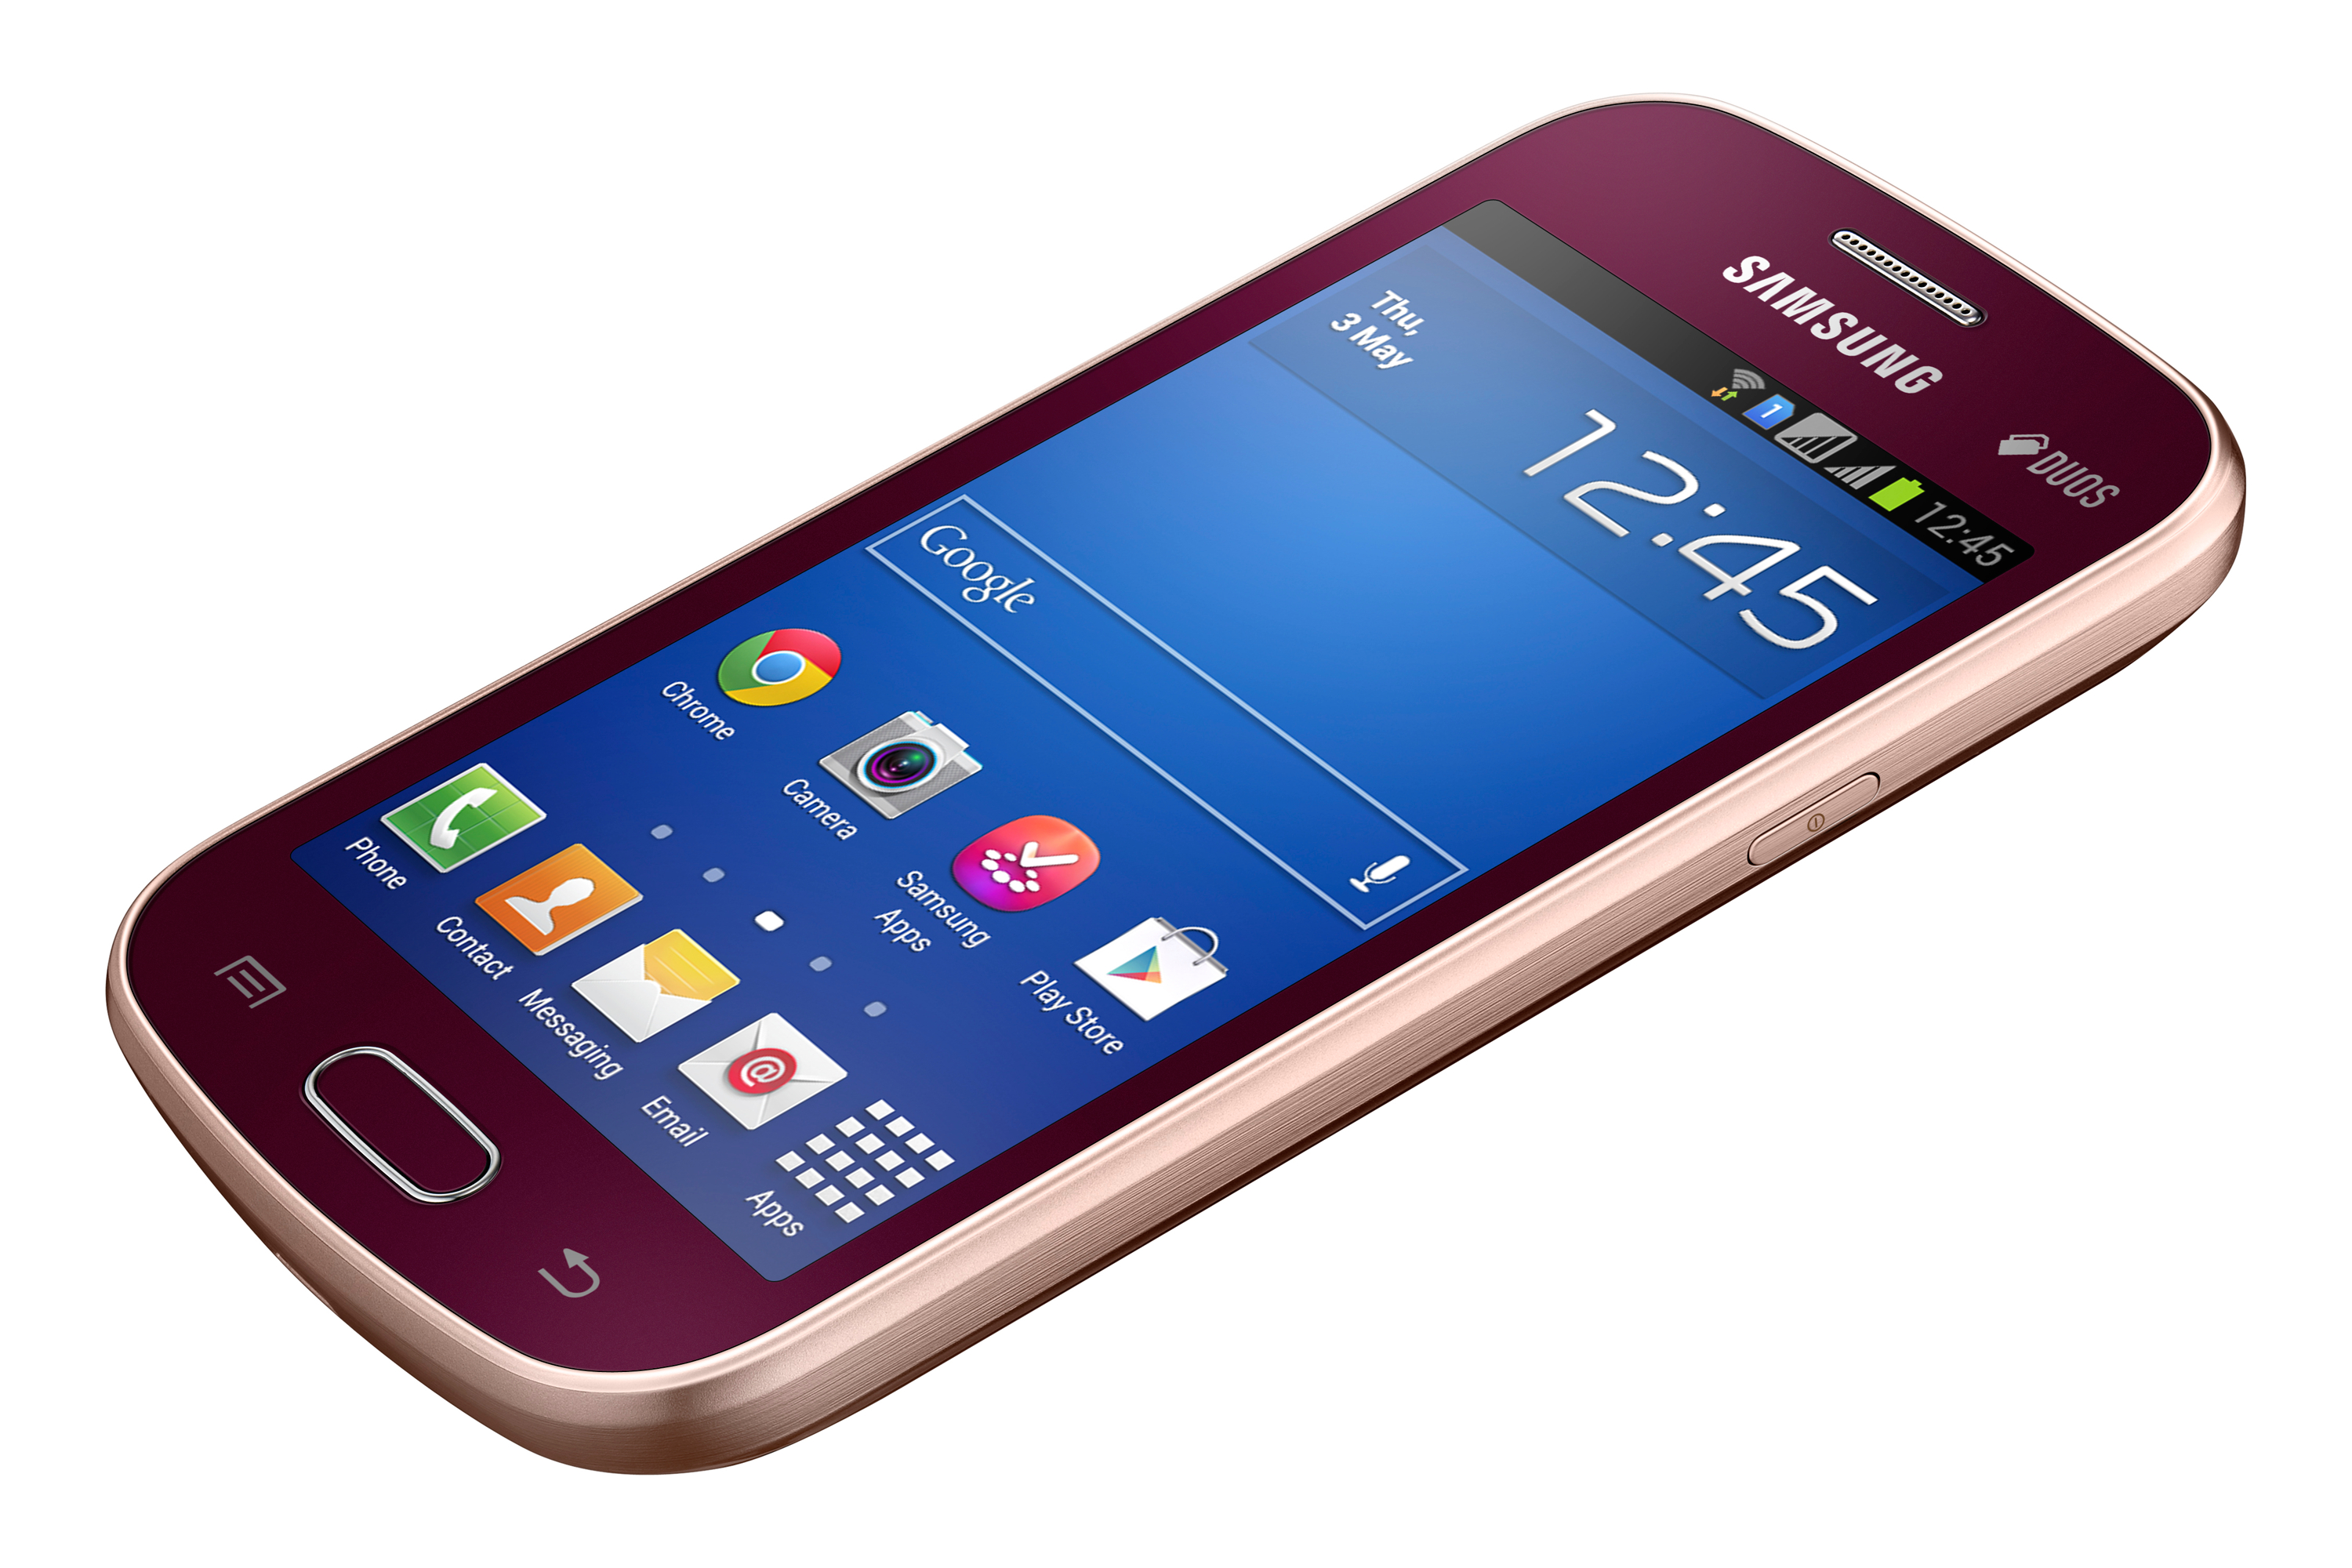 Samsung galaxy ташкент. Samsung Galaxy Star Plus gt-s7262. Samsung Galaxy trend s7390. Samsung trend gt-s7390. Samsung Duos gt-s7262.